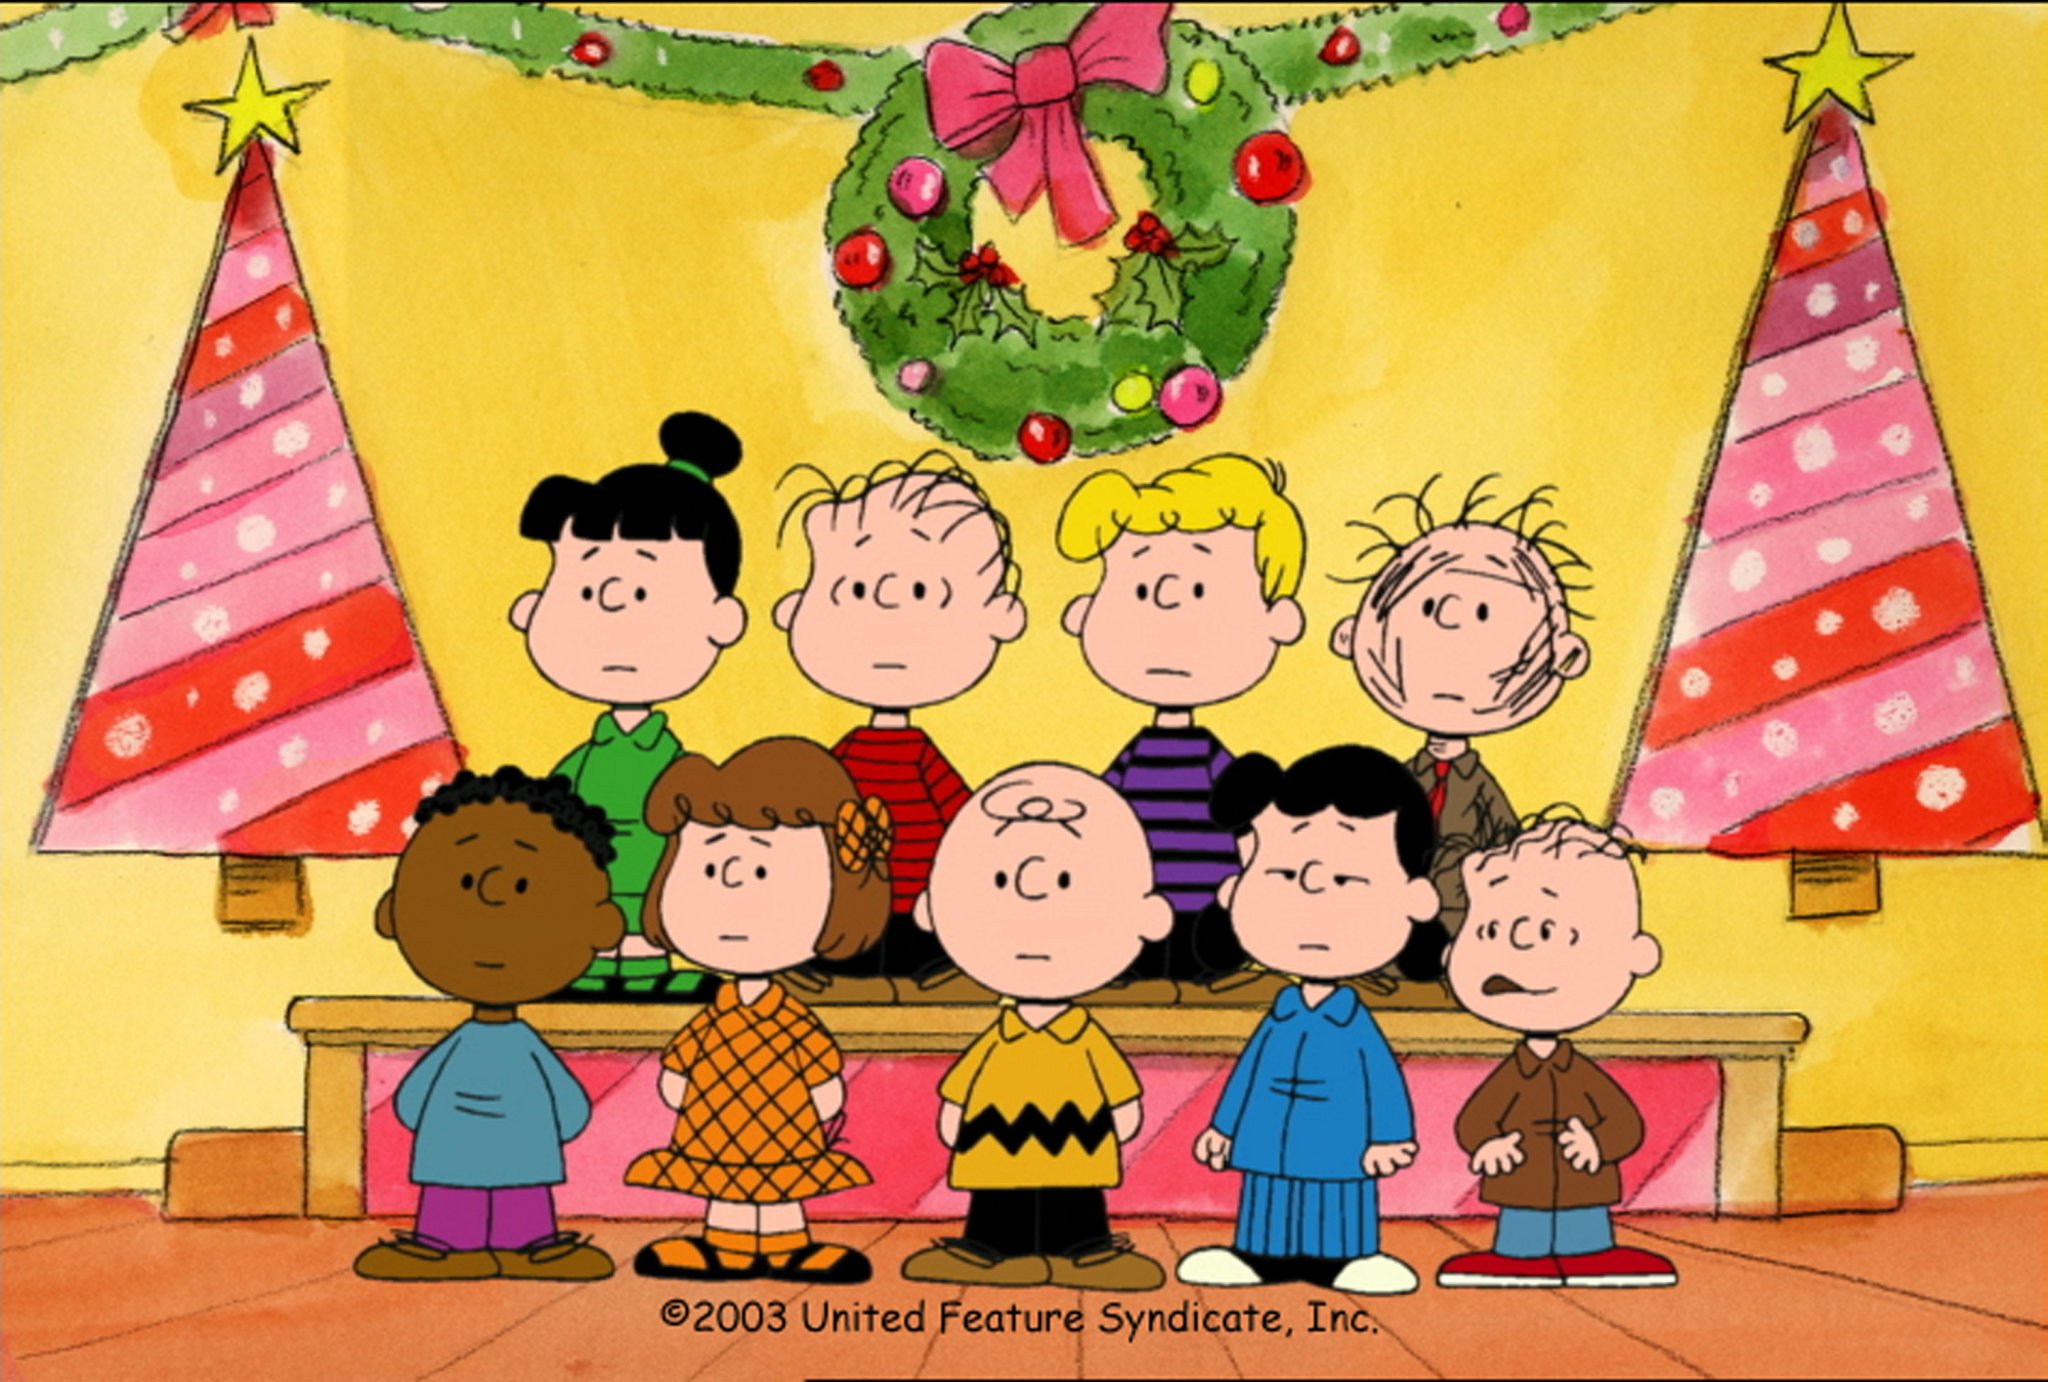 'A Charlie Brown Christmas' at 50